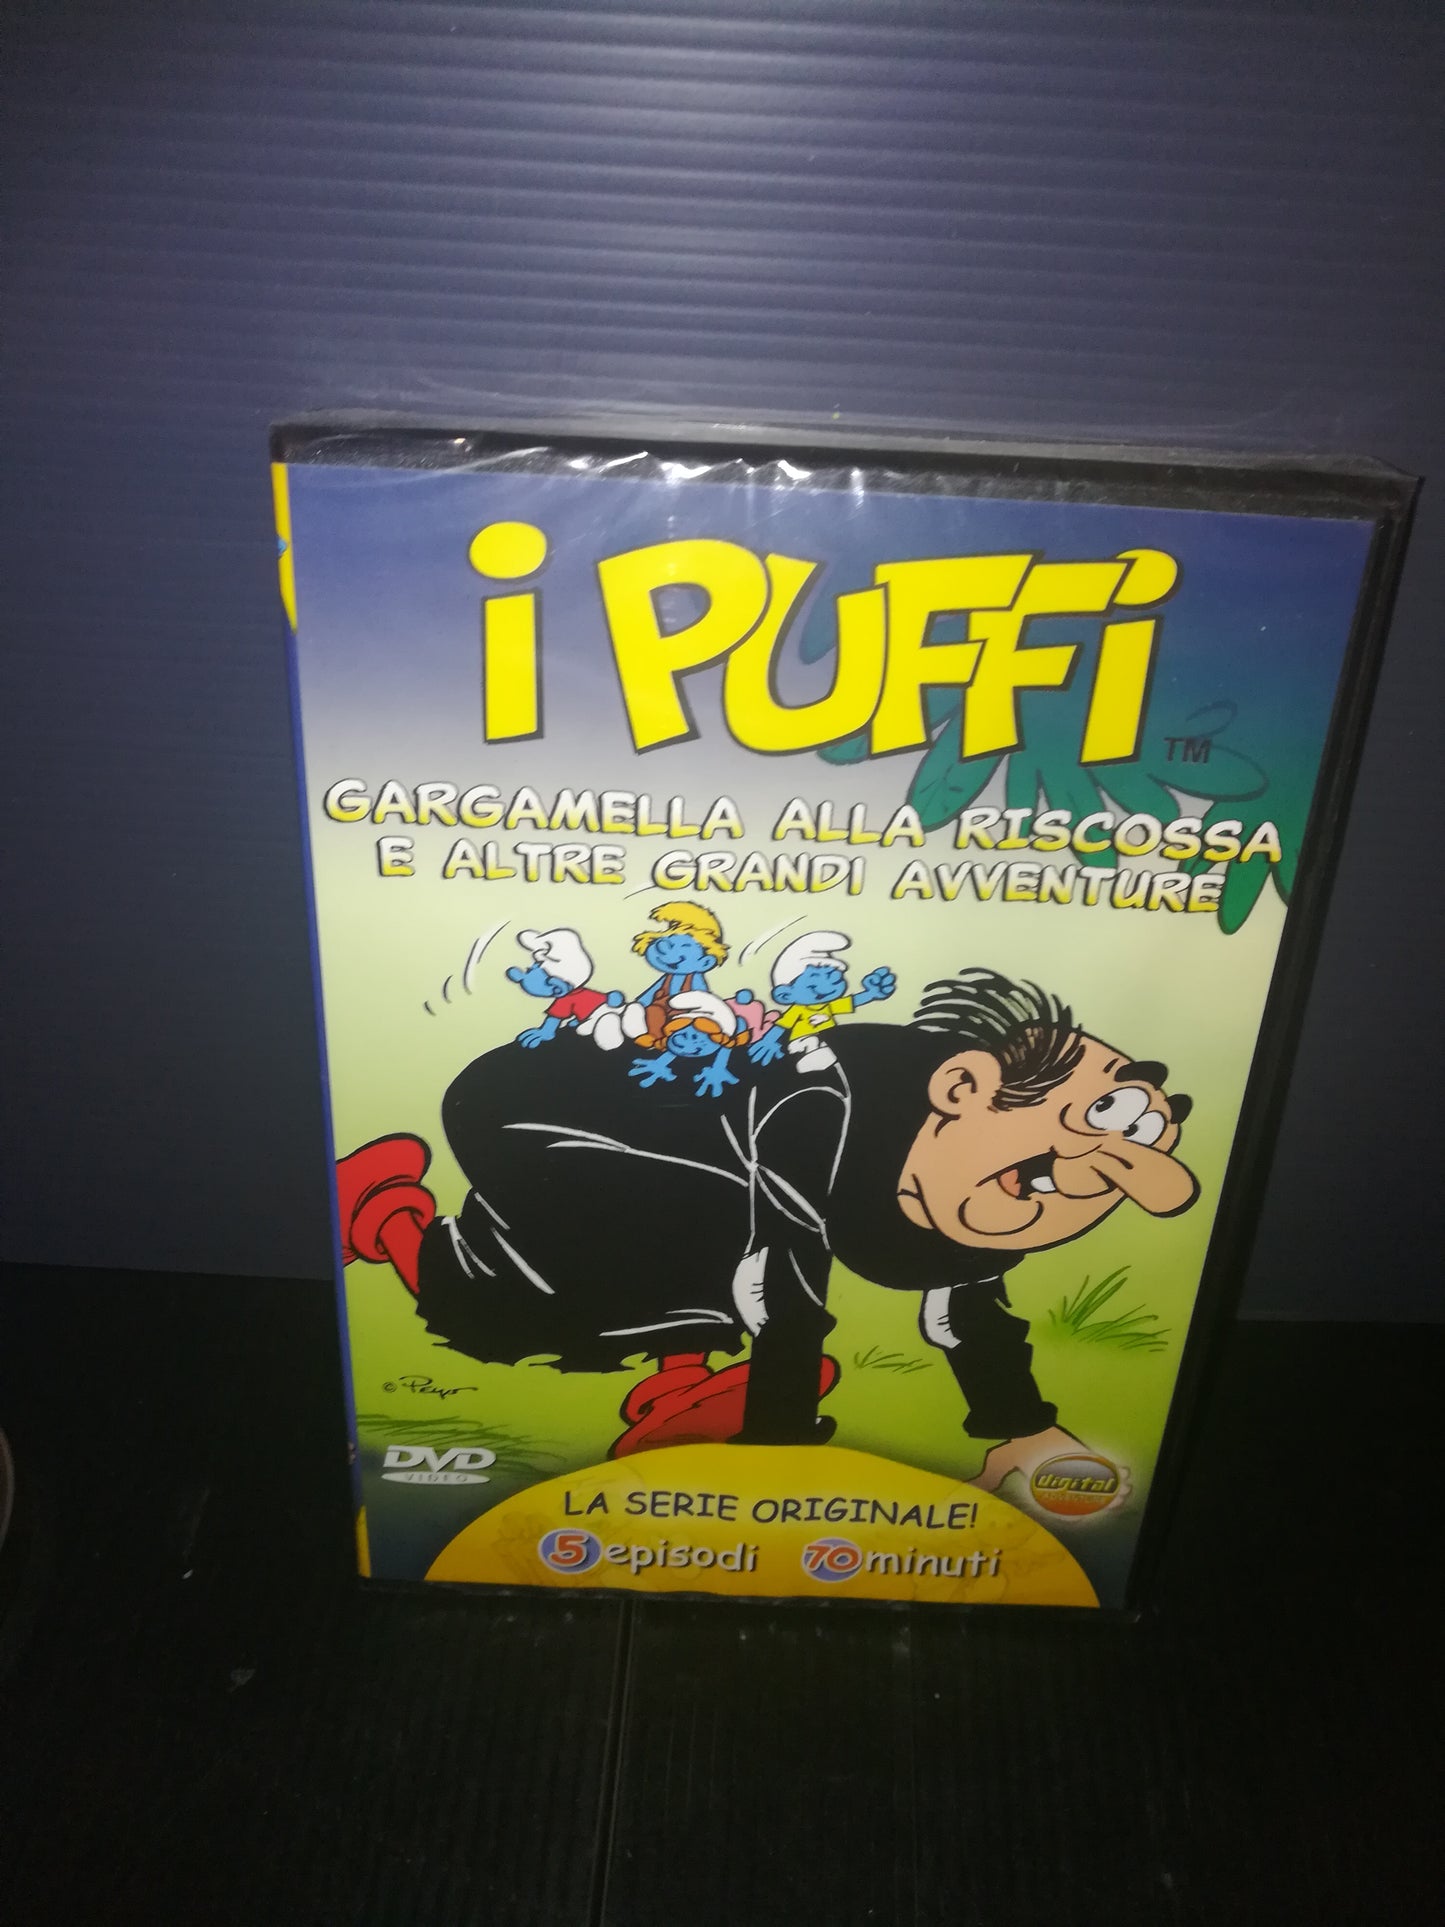 "Gargamella alla Riscossa" I Puffi DVD